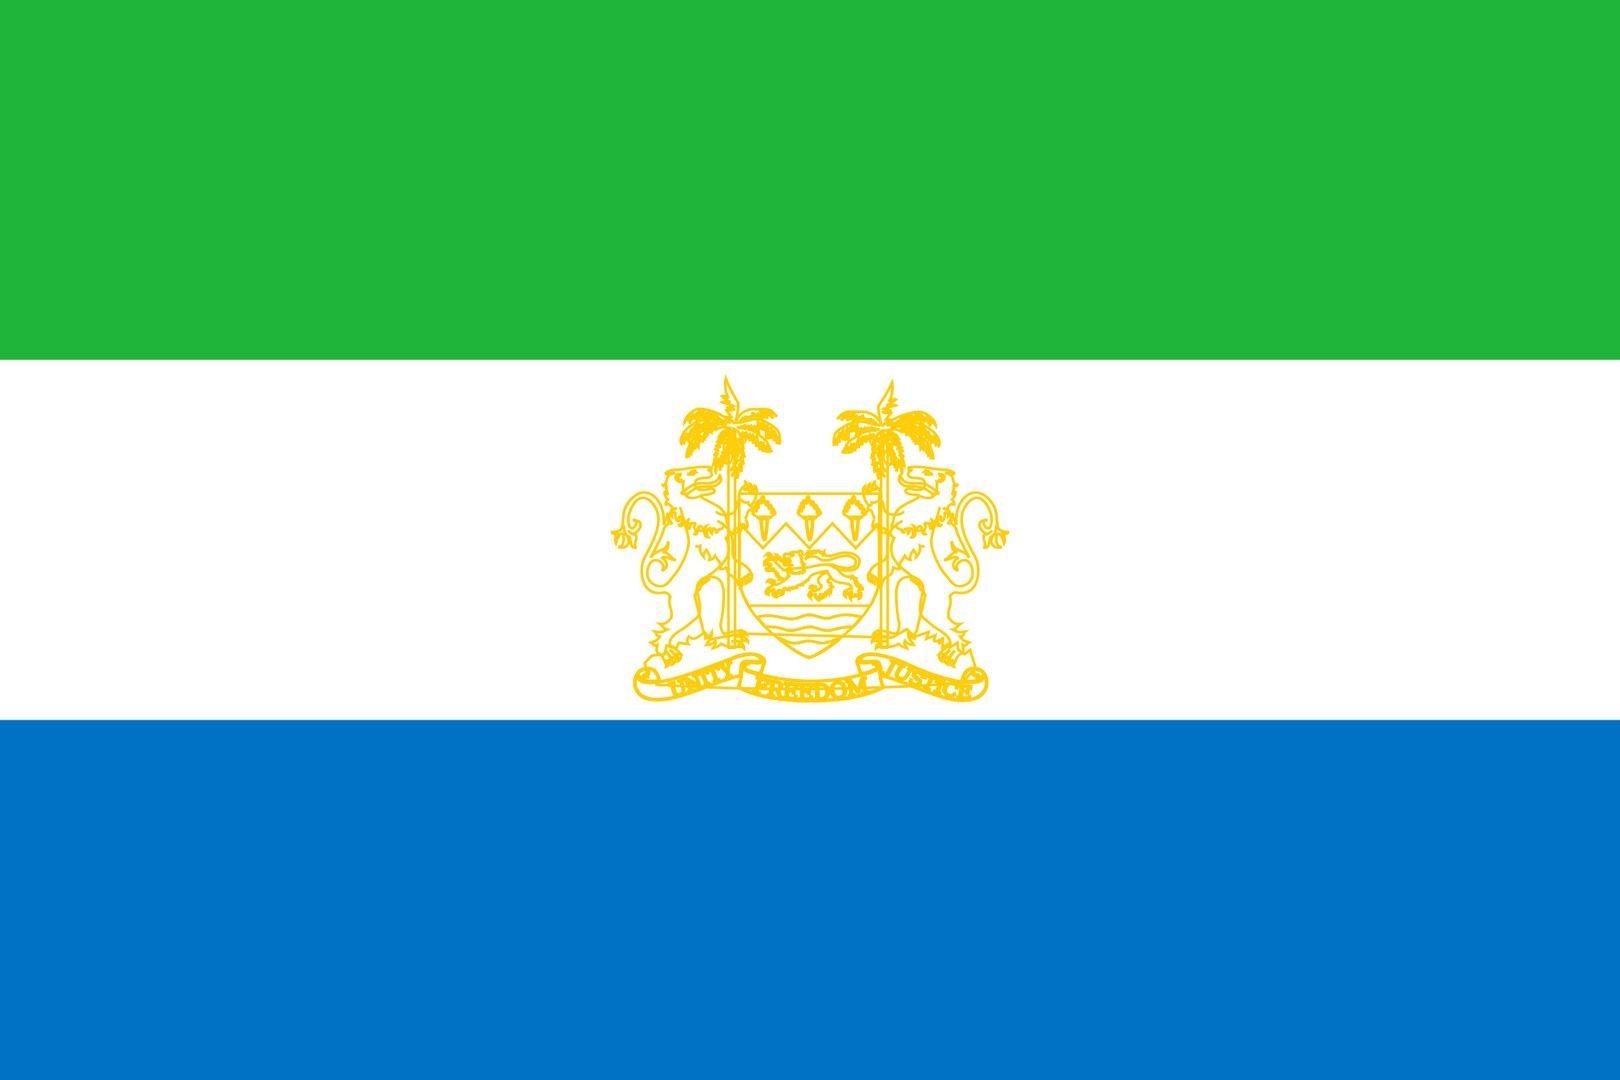 Sierra Leone flag wallpaper. Flags wallpaper. Sierra